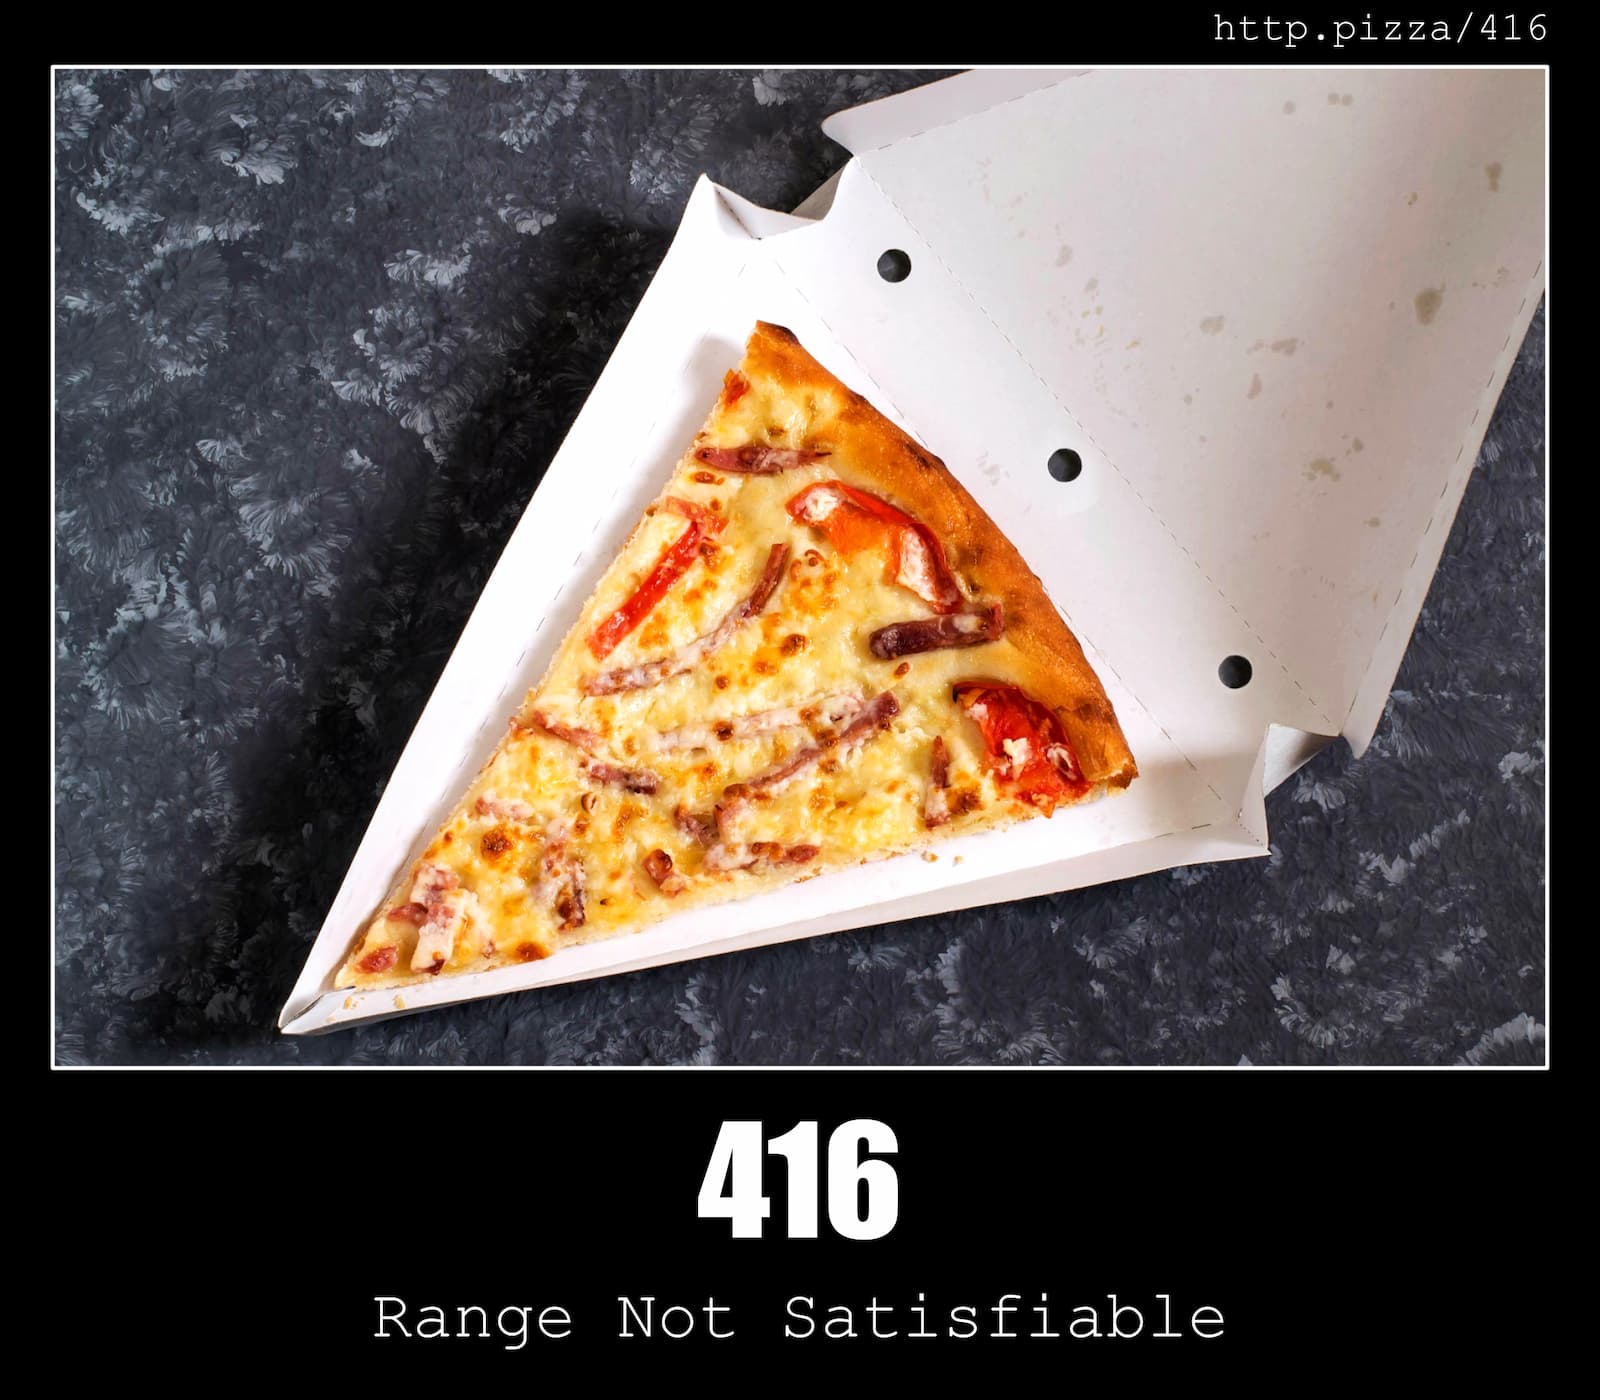 HTTP Status Code 416 Range Not Satisfiable & Pizzas